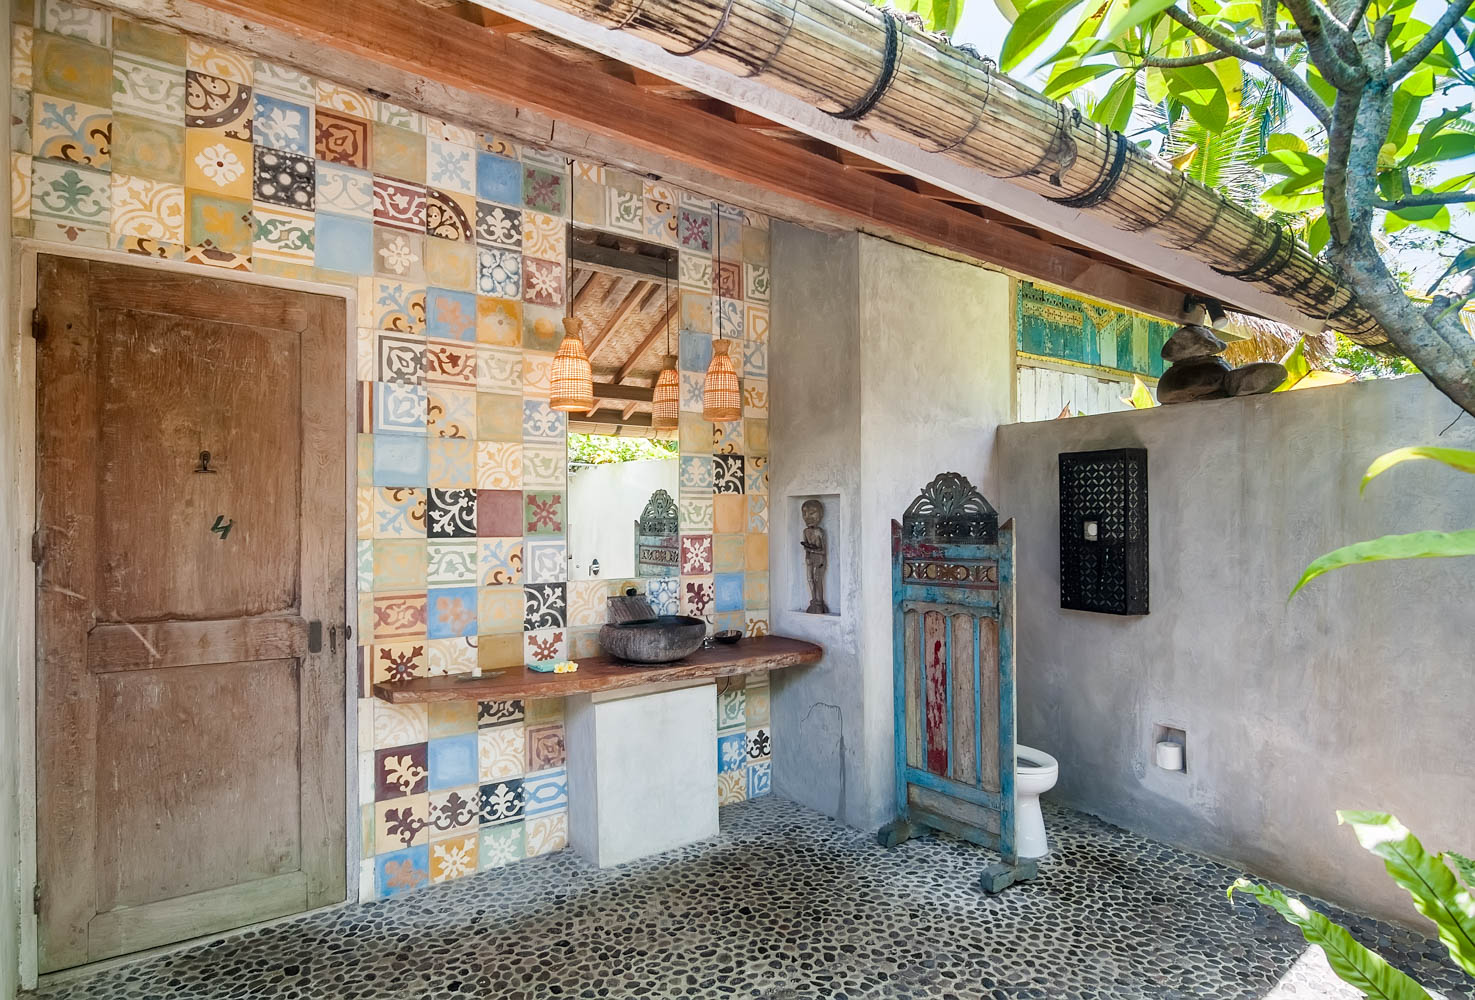 reclaimed cement tiles in open air bath